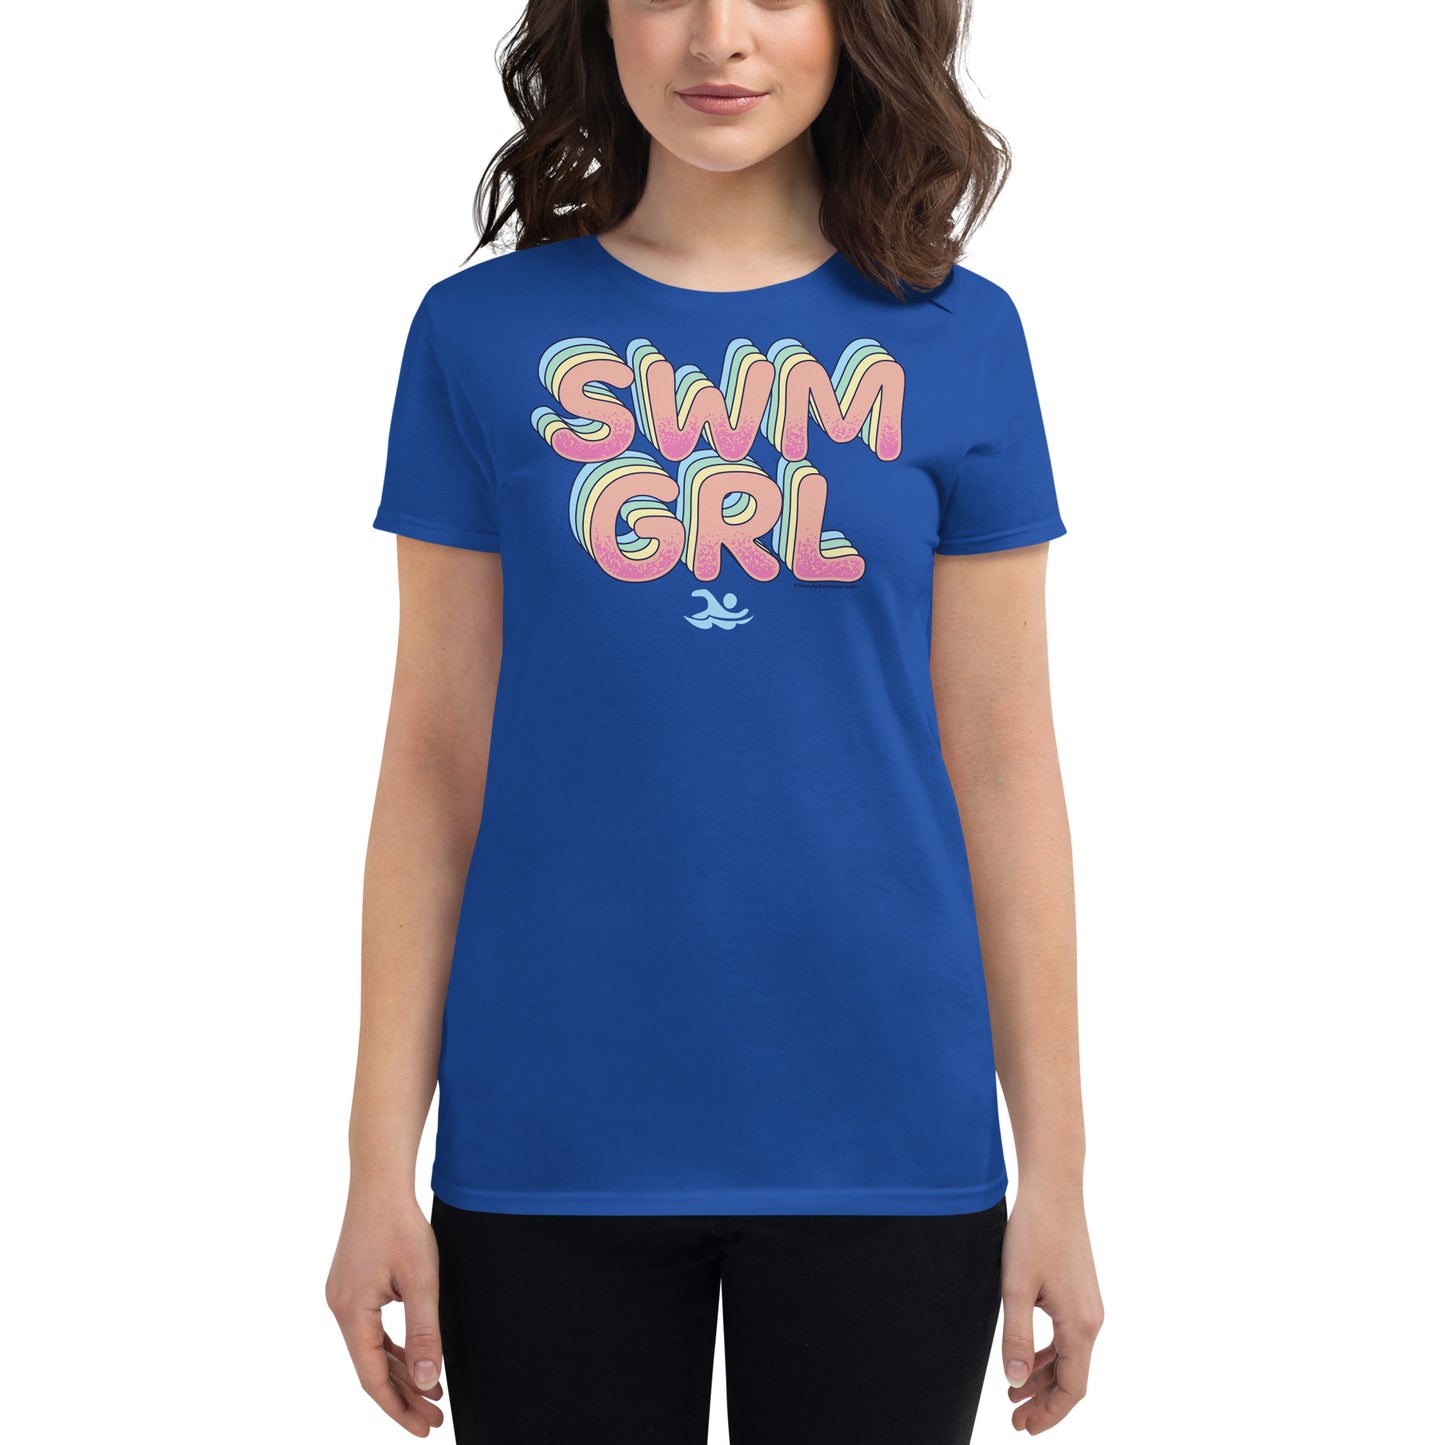 SWM GRL Swim Girl Women's Short Sleeve T Shirt